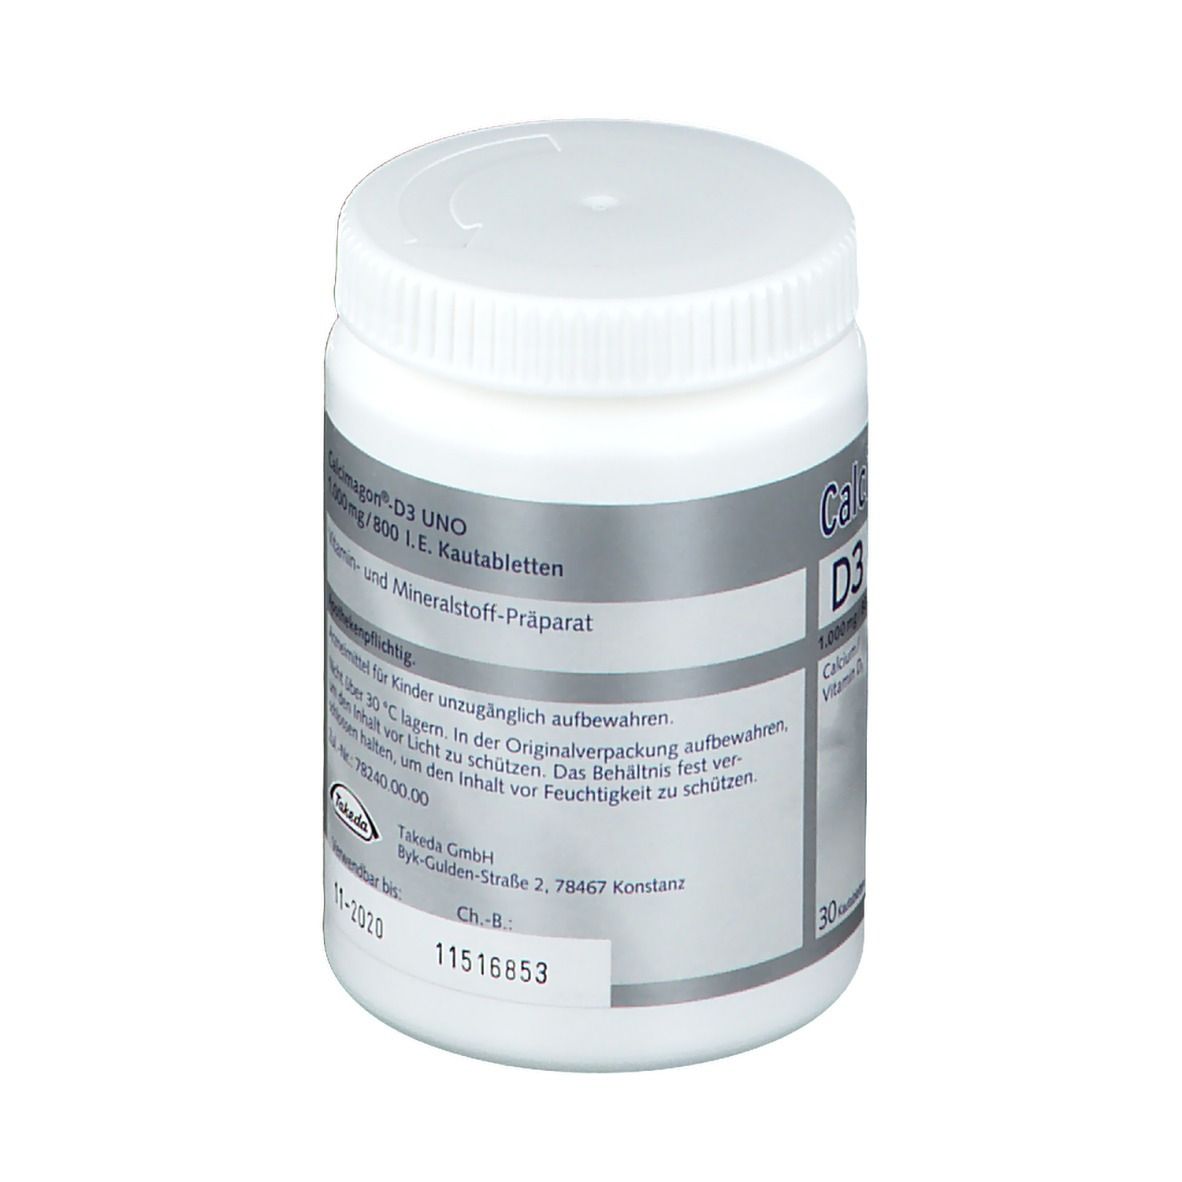 Calcimagon® D3 UNO 1000 mg/ 800 I.E. Kautabletten